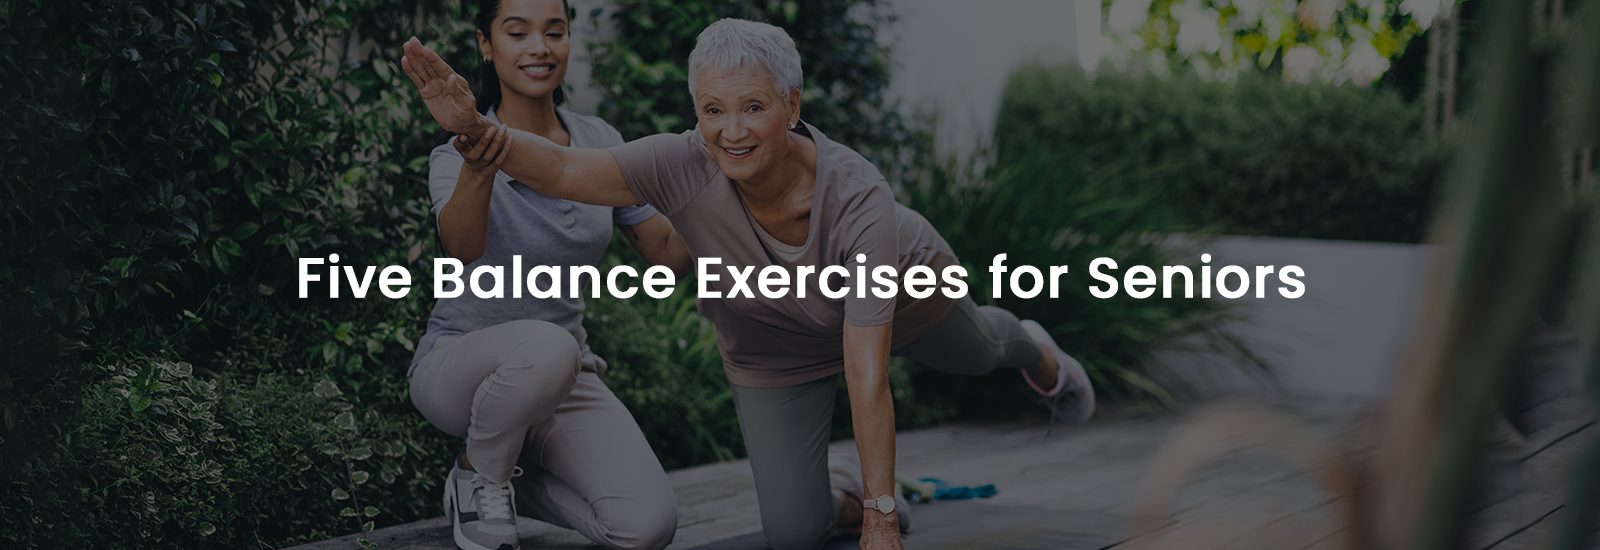 Five Balance Exercises for Seniors | Banner Image